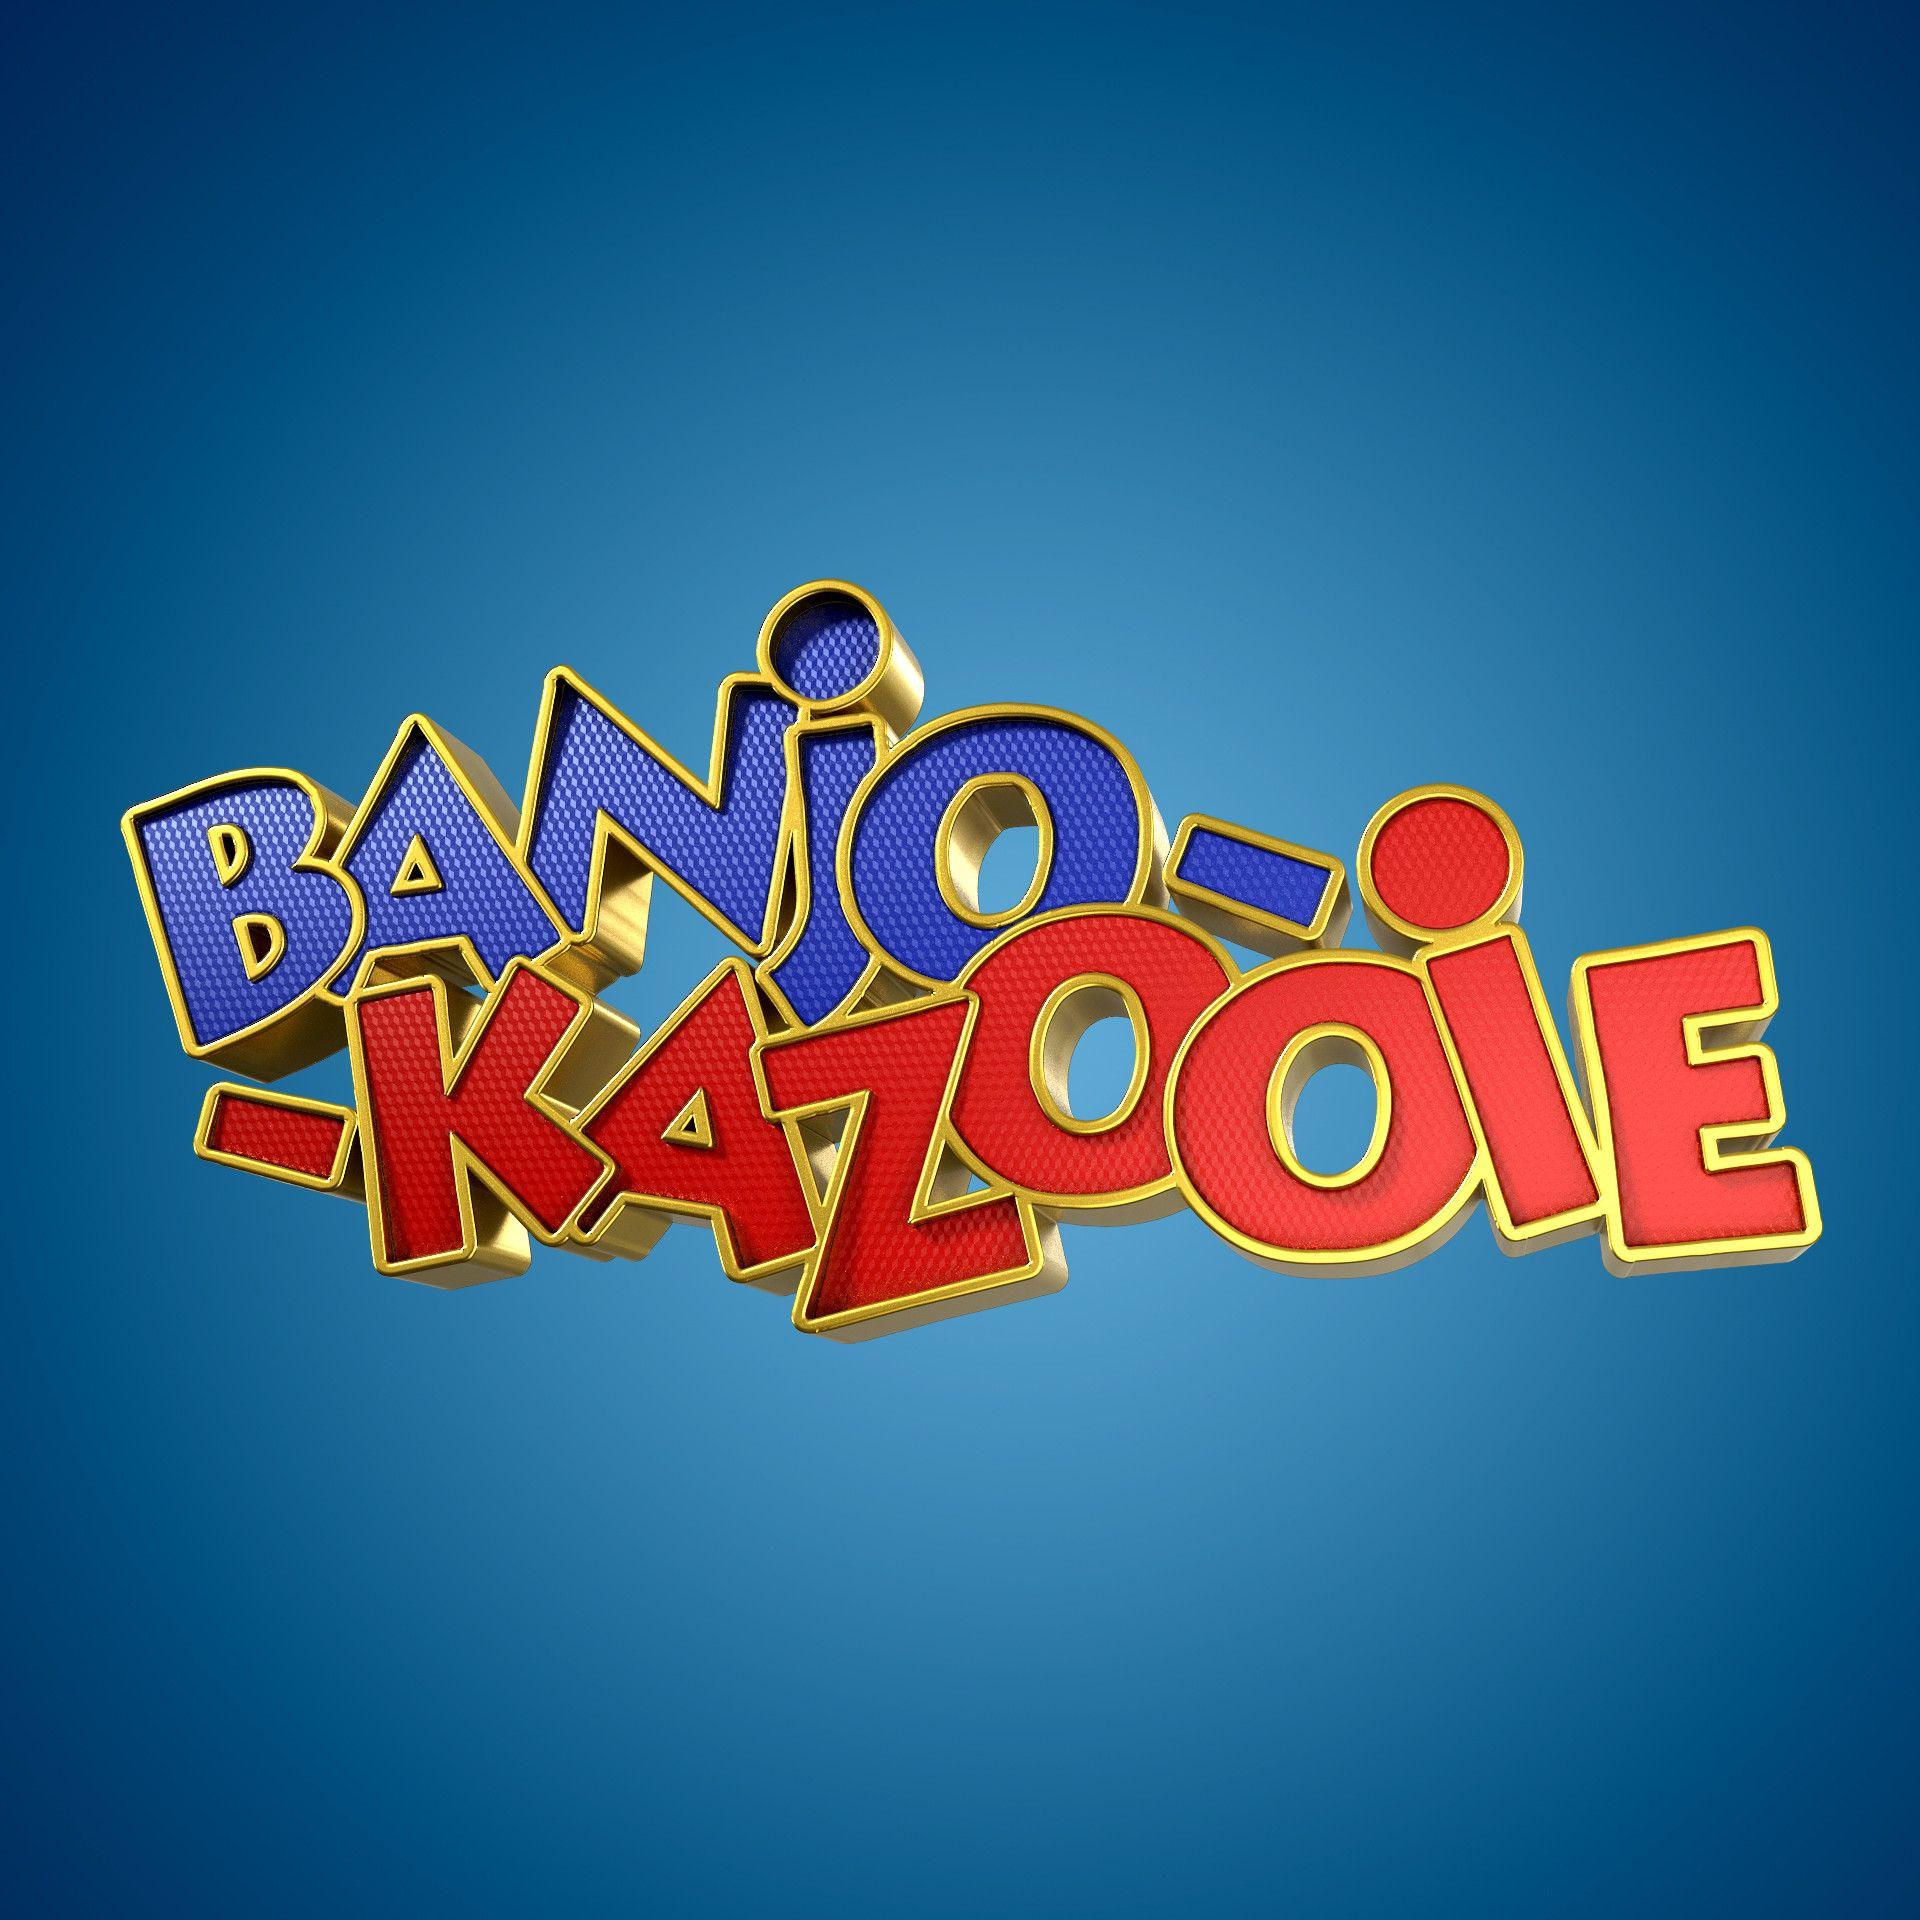 Banjo-Kazooie Logo - ArtStation - Banjo Kazooie 3D Fan Art, Michael Santin